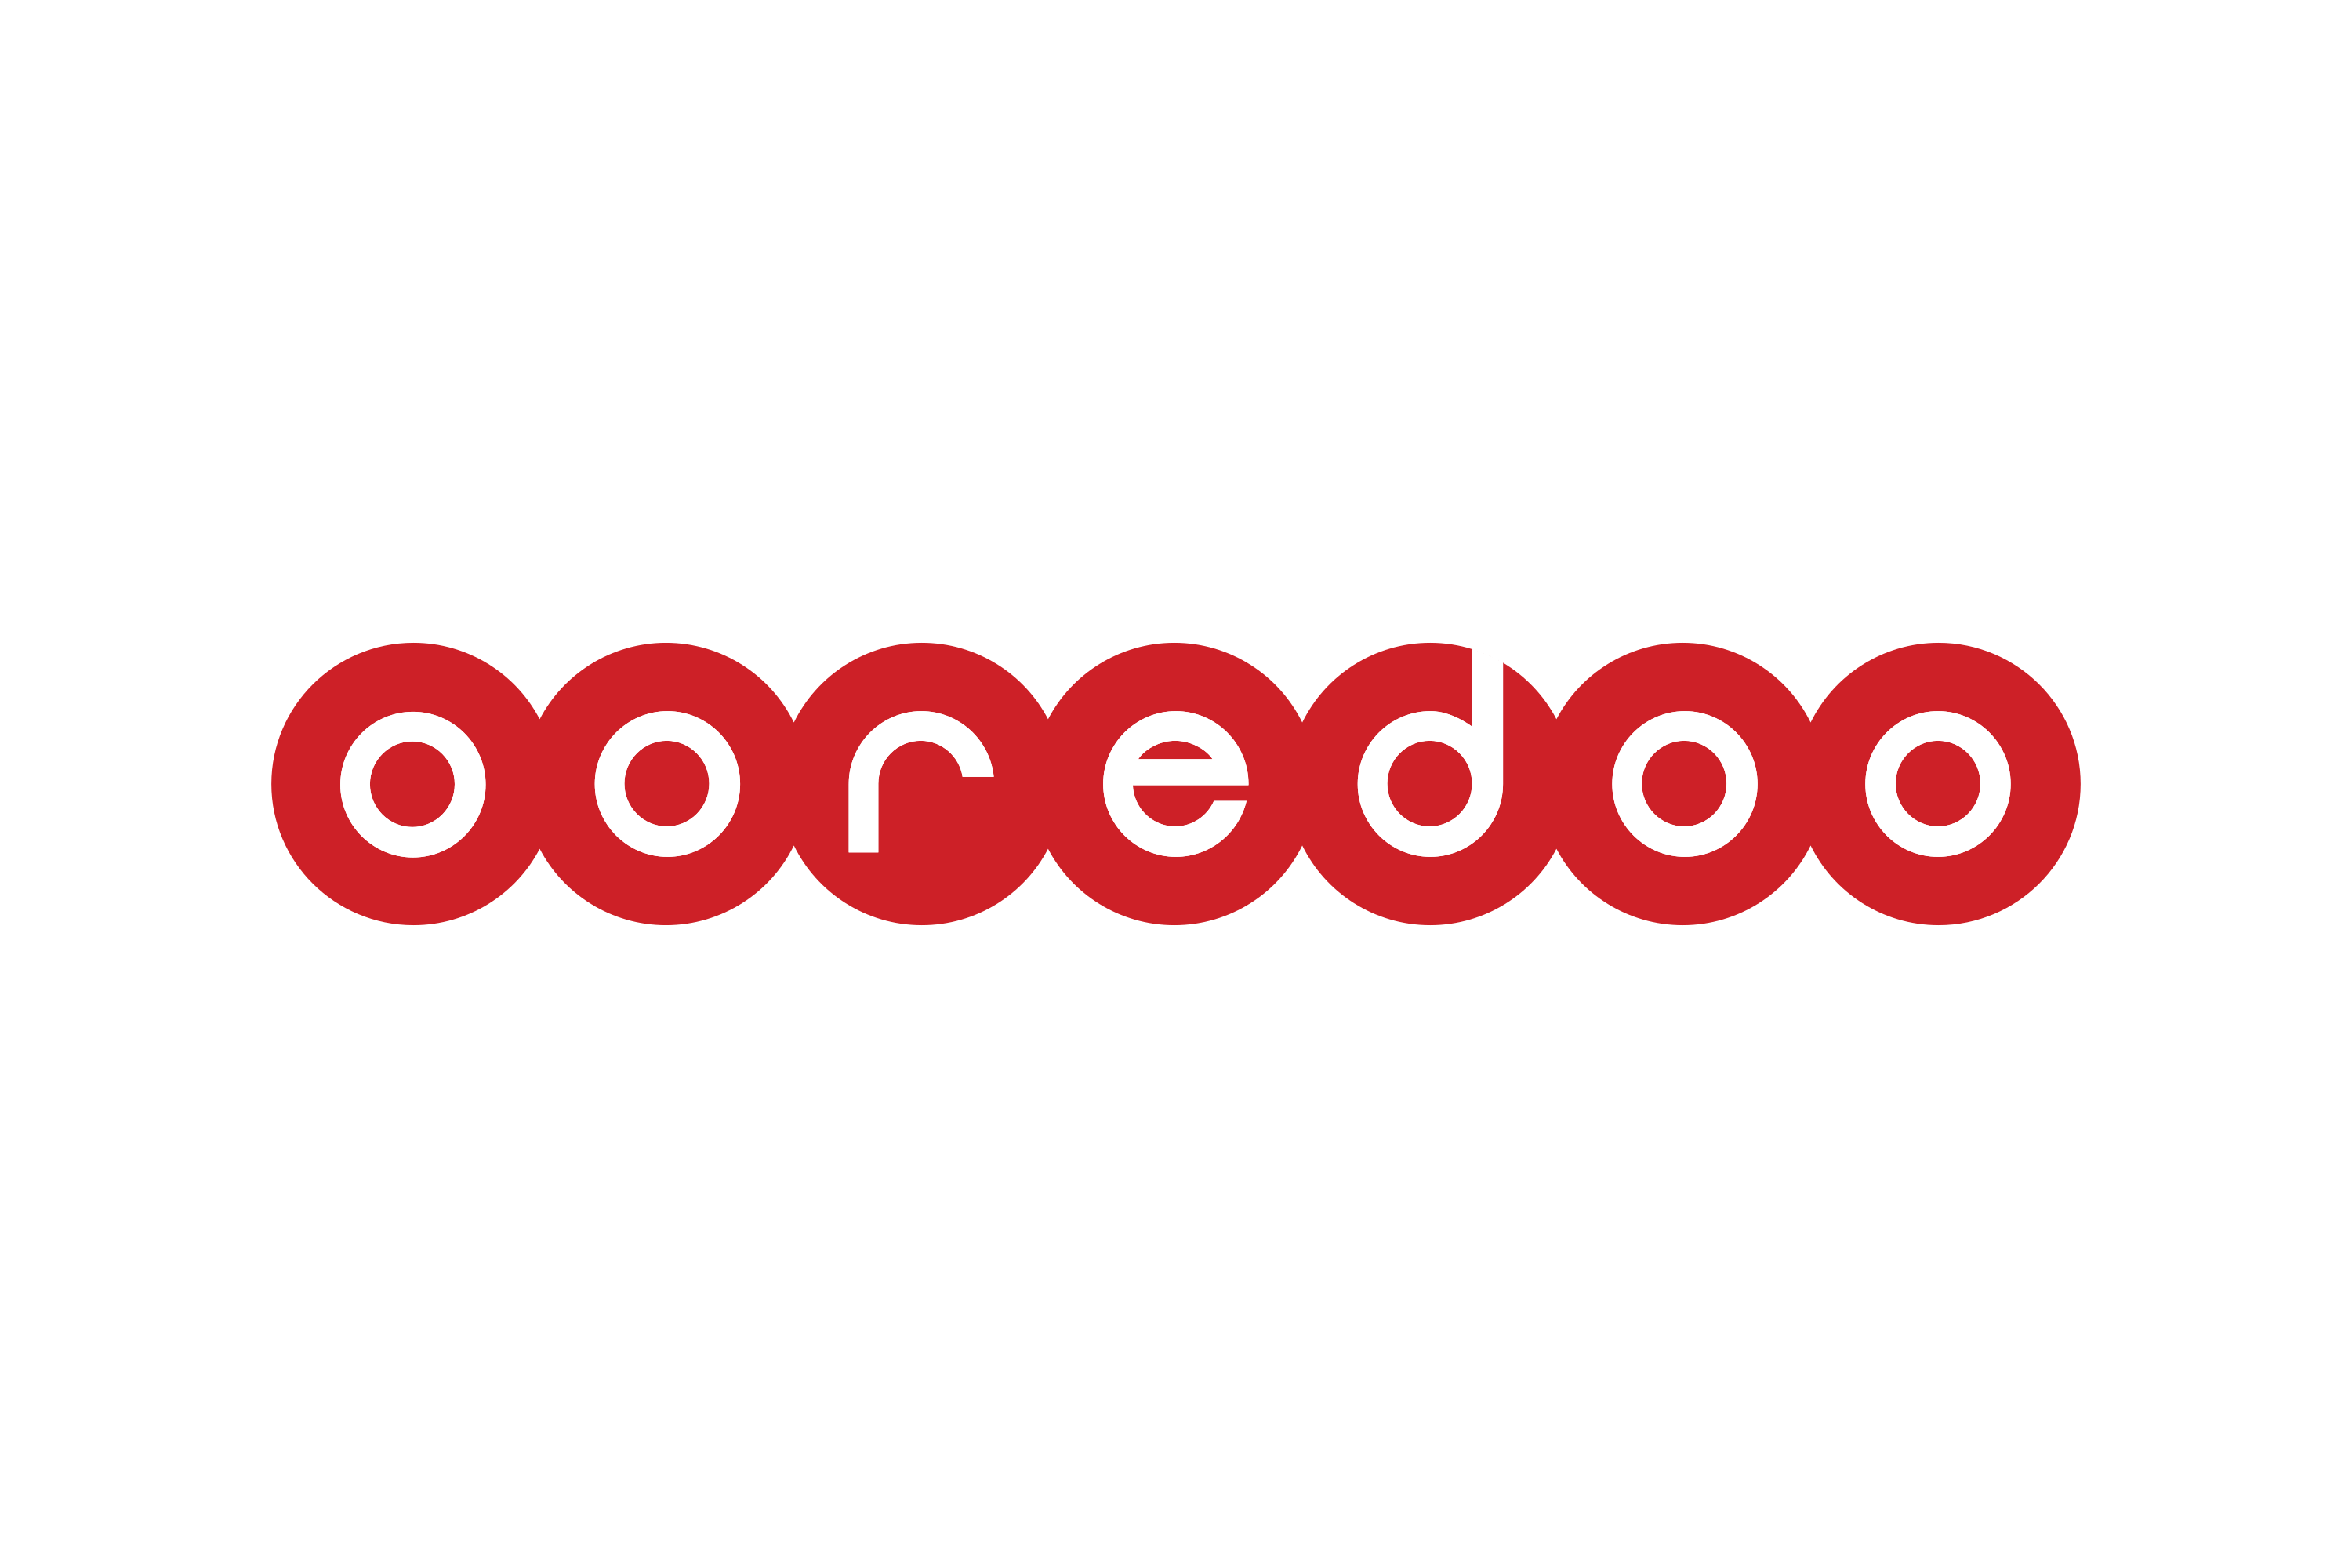 Download Ooredoo Oman (Nawras) Logo in SVG Vector or PNG File Format